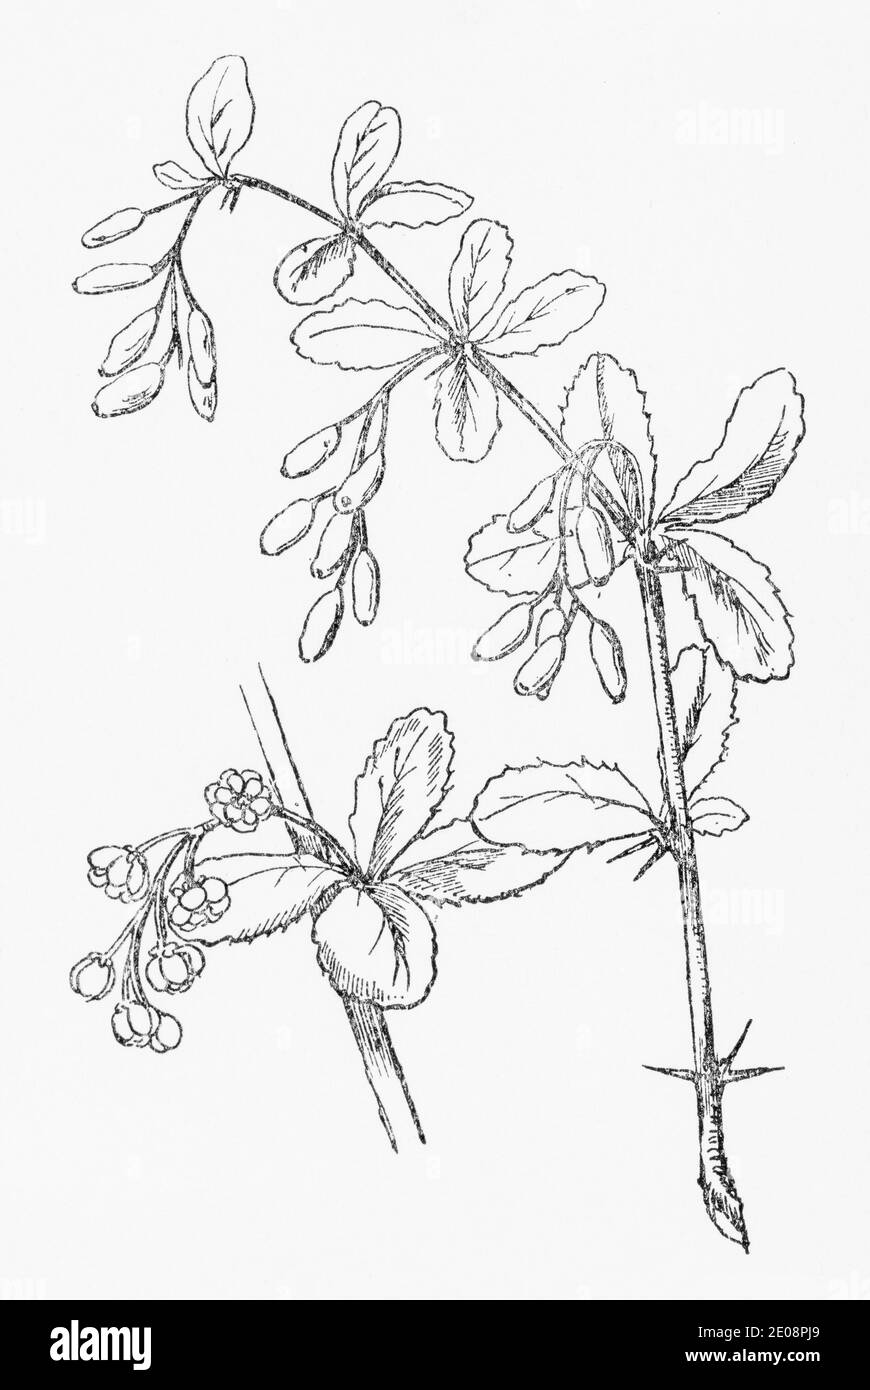 Old botanical illustration engraving of Potentilla sterilis / Barren Strawberry. Traditional medicinal herbal plant. See Notes Stock Photo